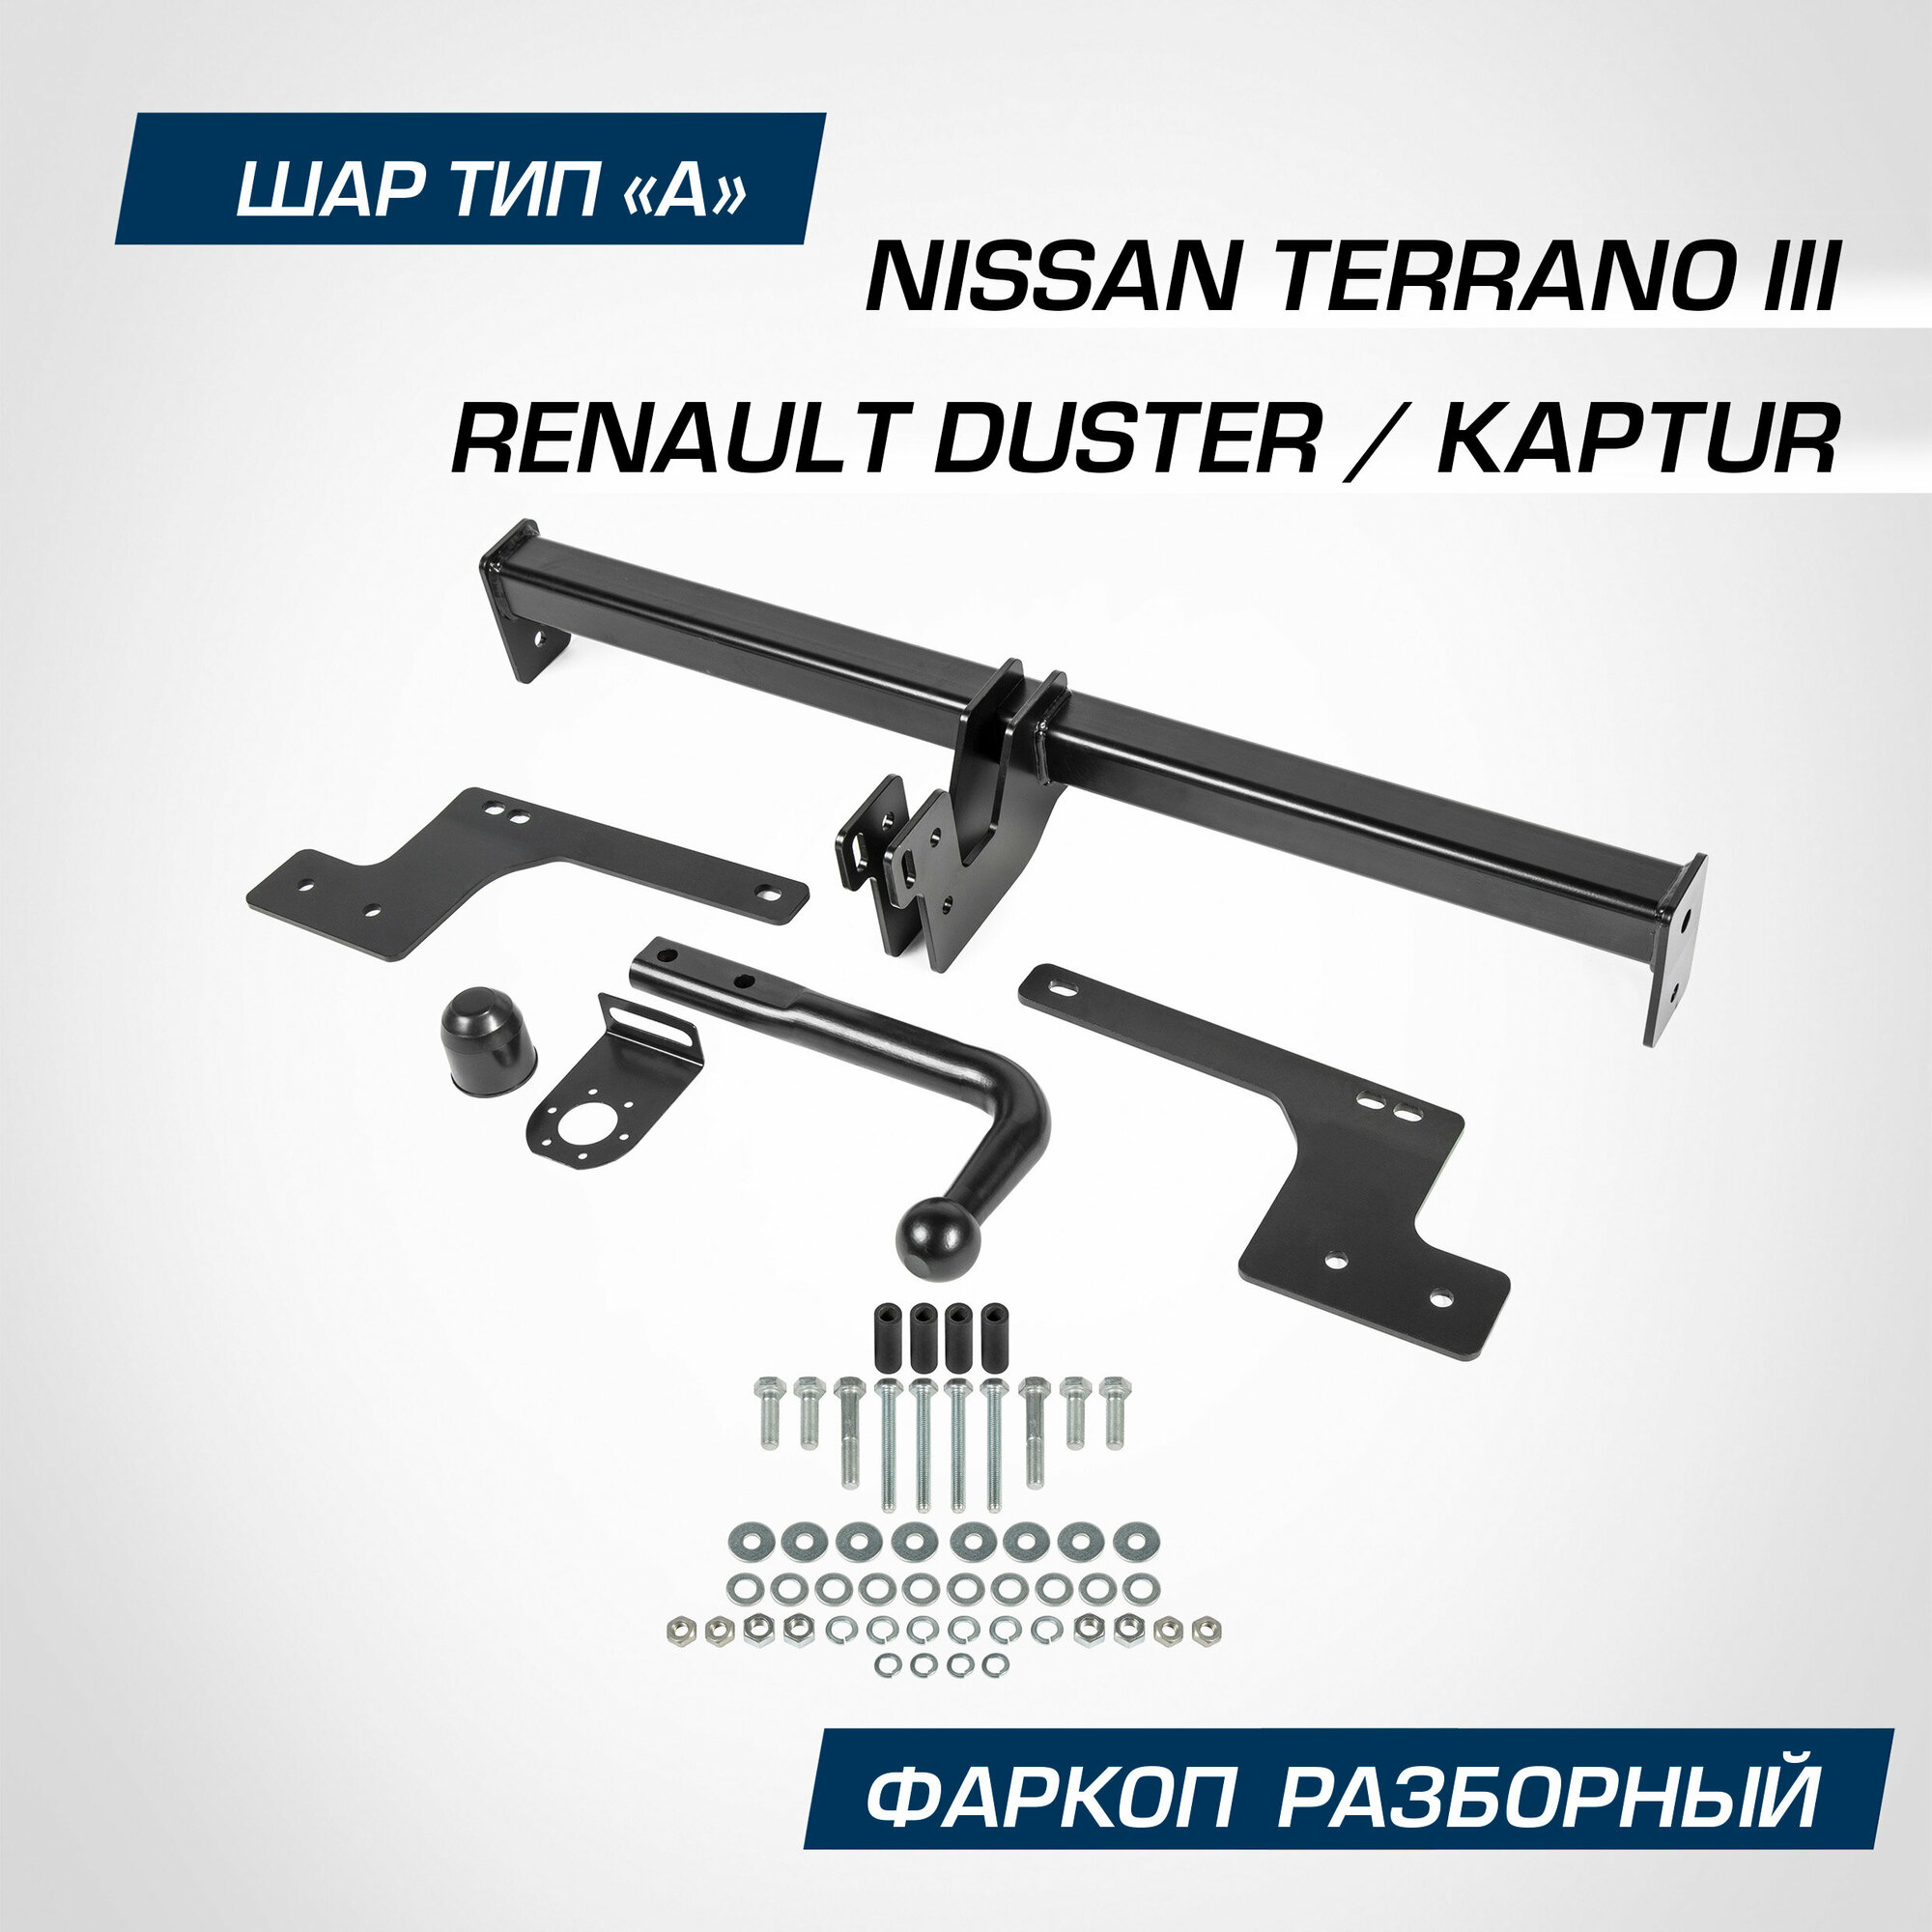 Фаркоп разборный Berg для Nissan Terrano III 2014-2017 2017-/Renault Duster I II 2010-2021 2021-/Kaptur 2016-2020 2020- шар A1200/75 кг F.4711.001